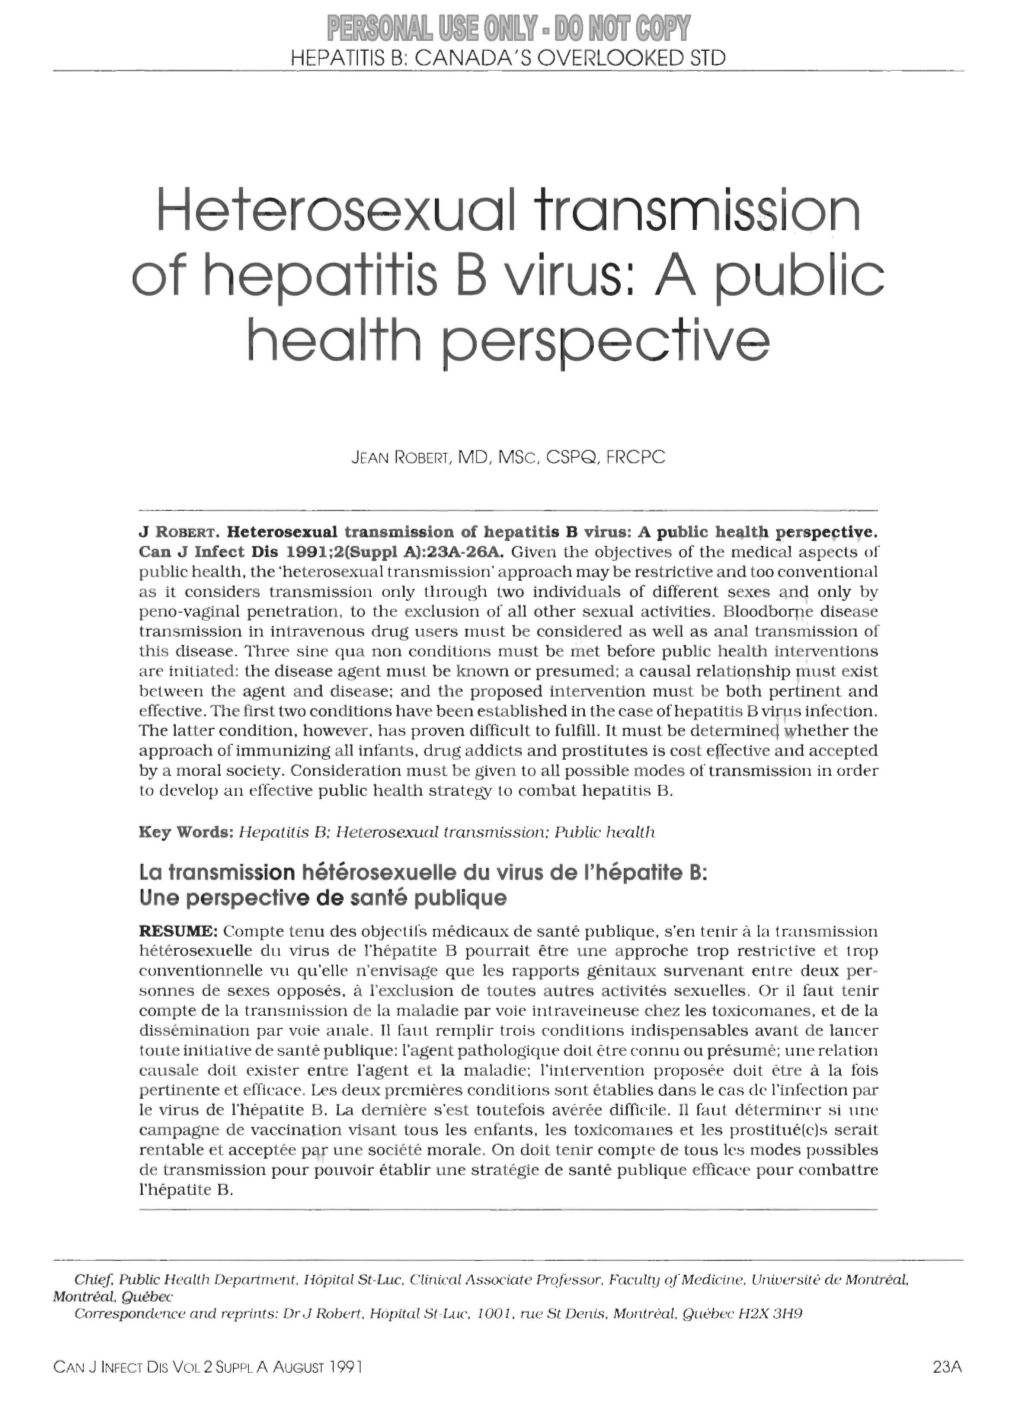 Heterosexual Transmission of Hepatitis B Virus: a Public He'j].Th Perspective